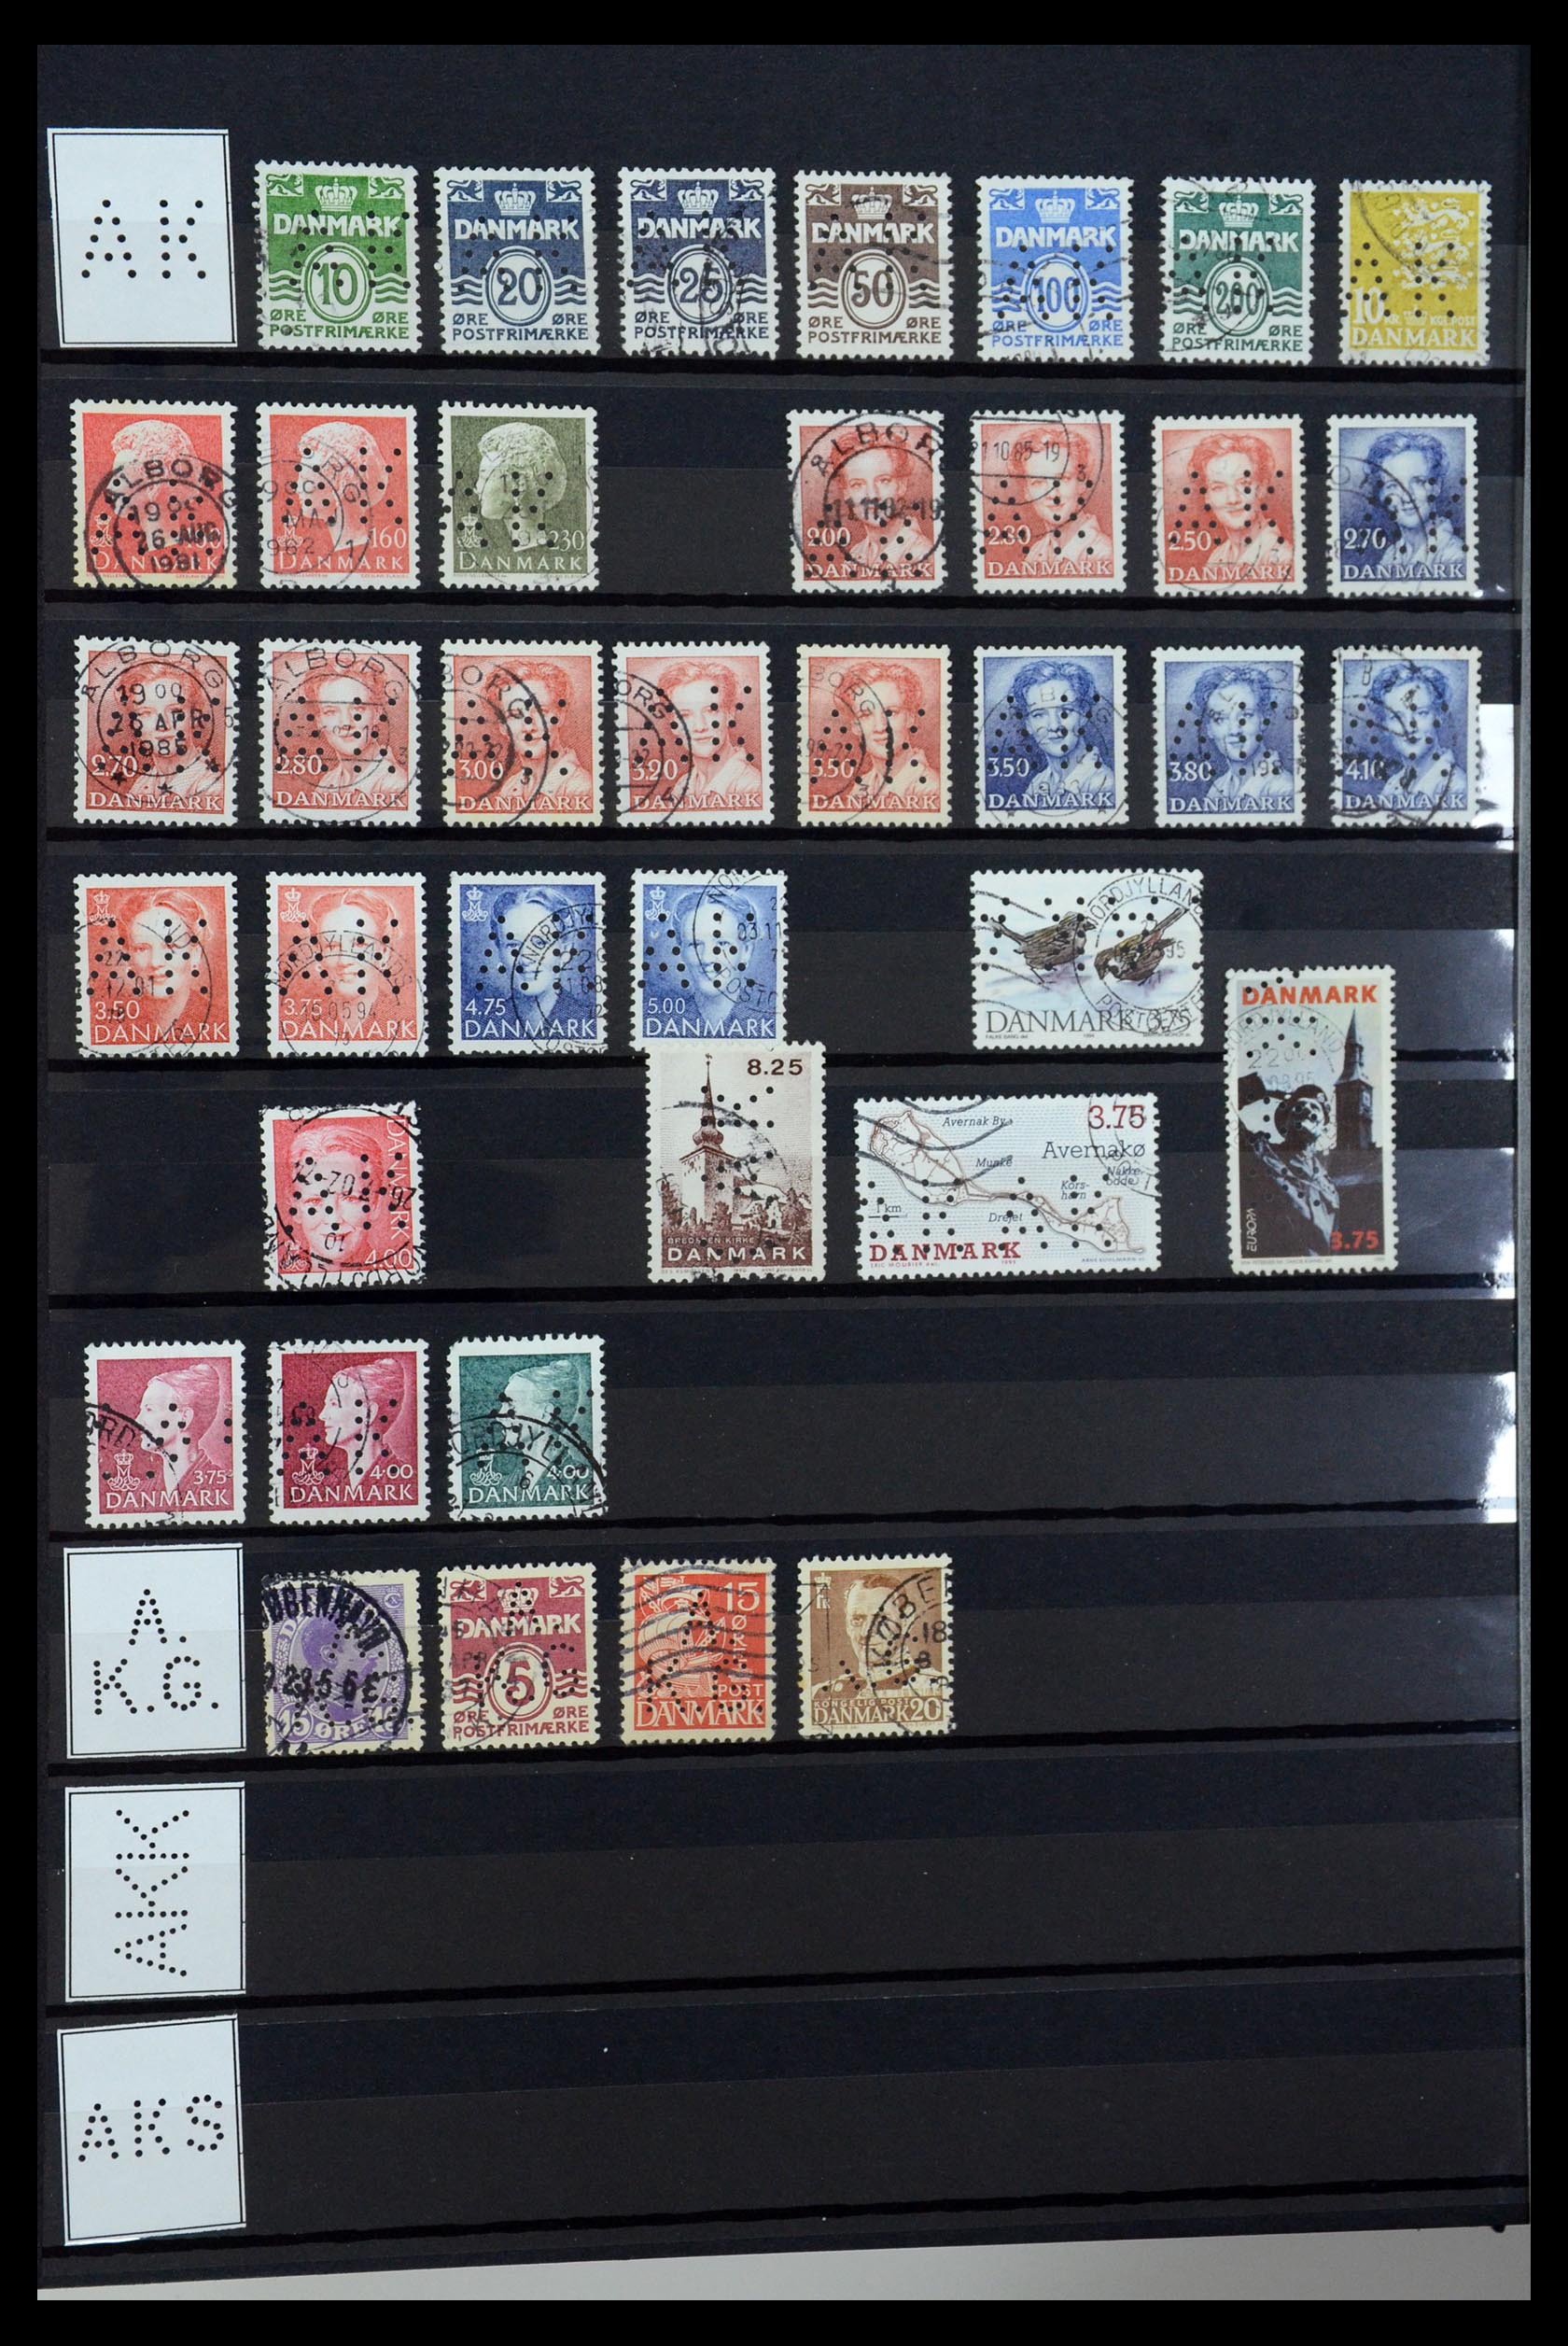 36396 006 - Stamp collection 36396 Denmark perfins.